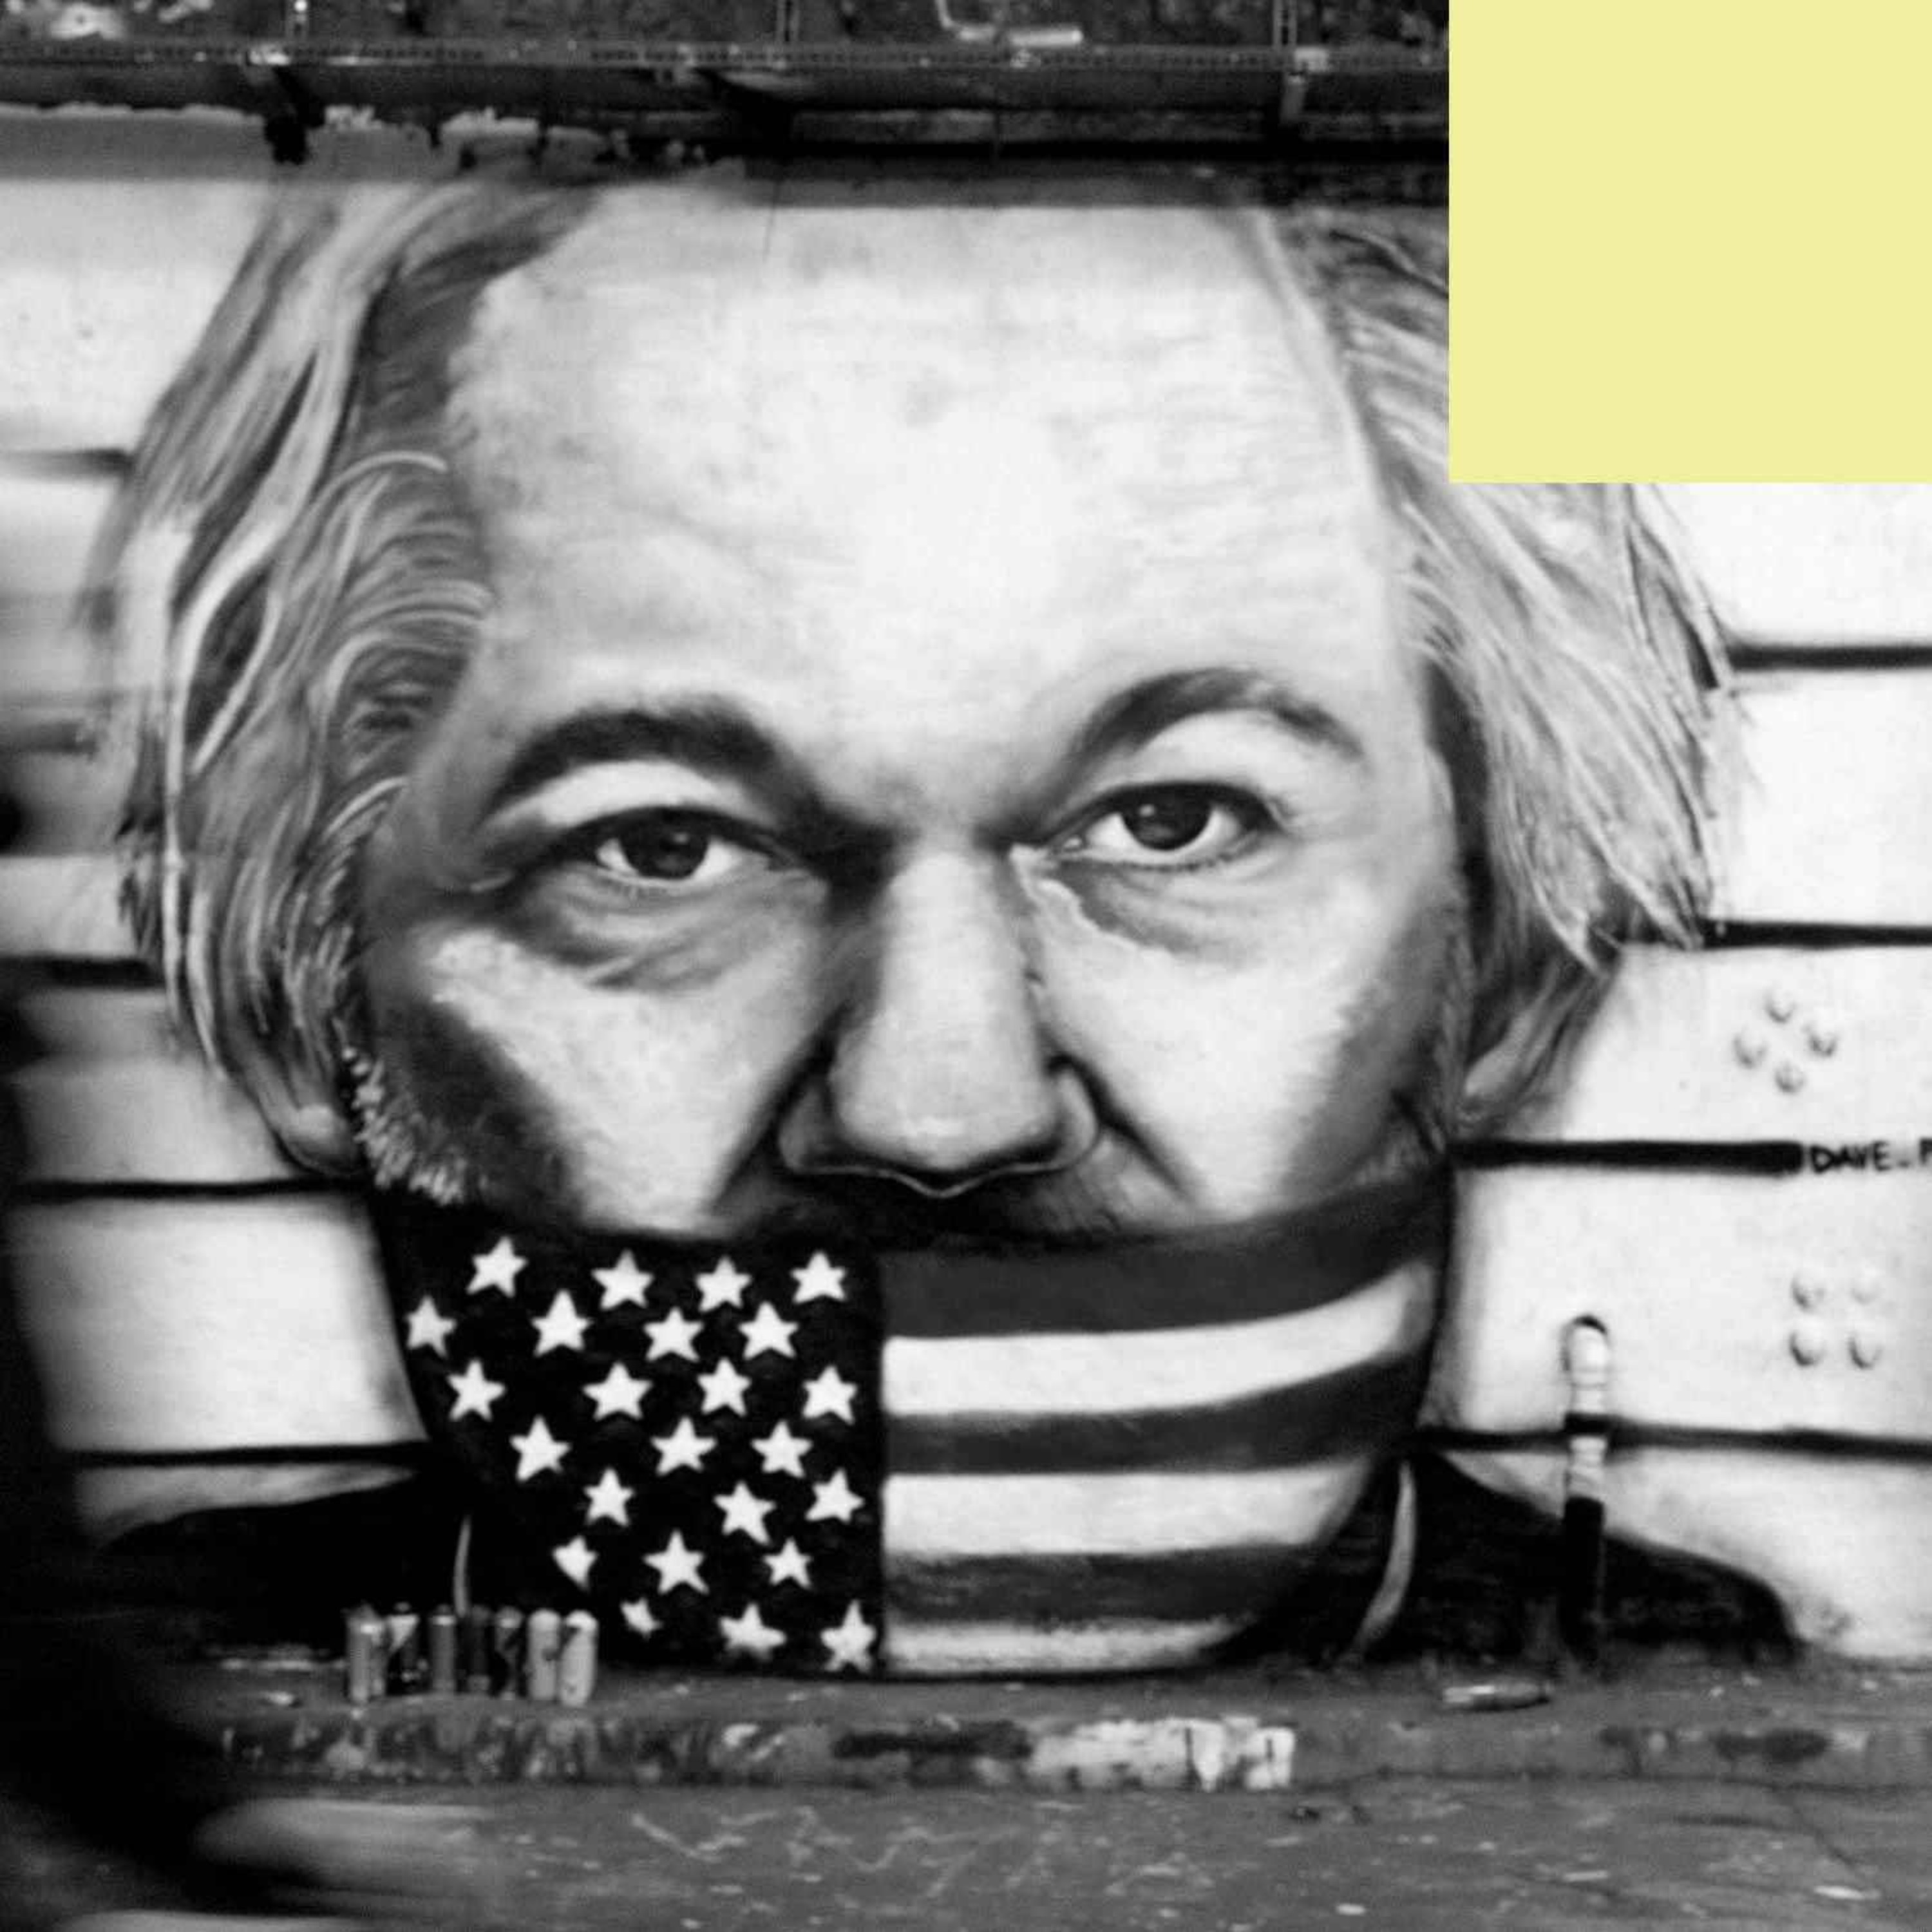 Life Inside the Brutal U.S. Prison That Awaits Julian Assange